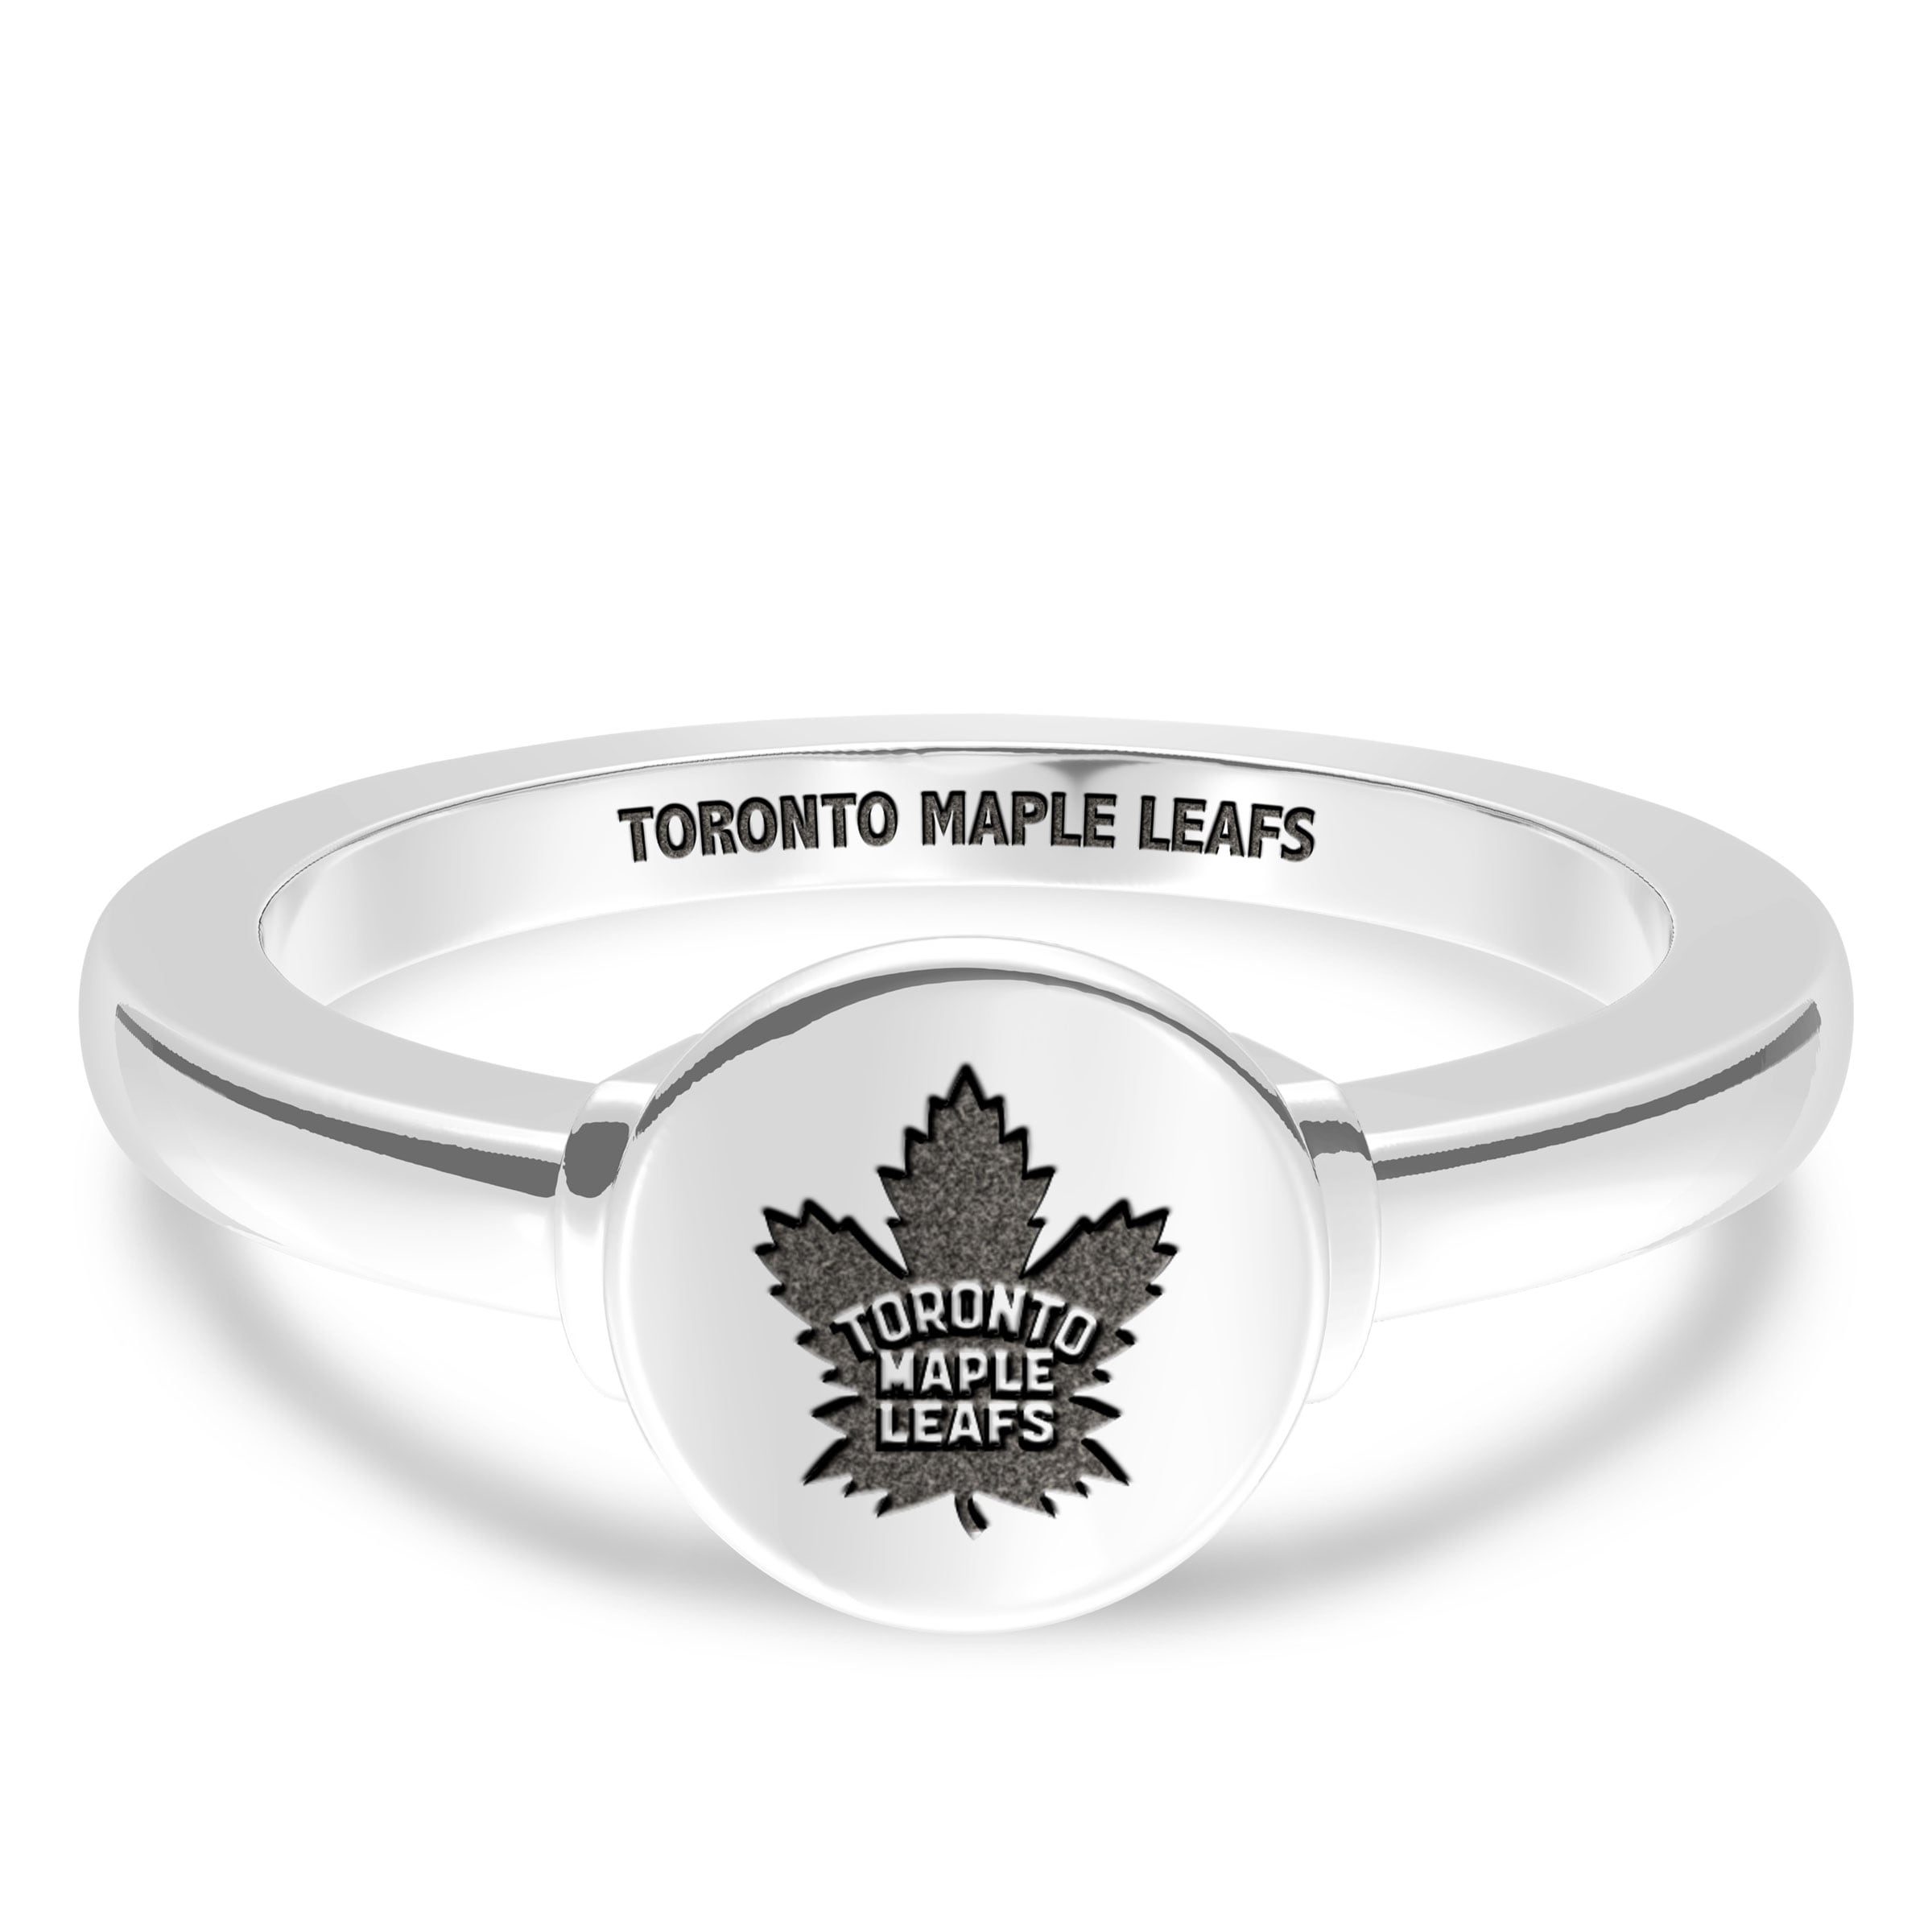 Toronto Maple Leafs Ring in Sterling Silver Design by BIXLER